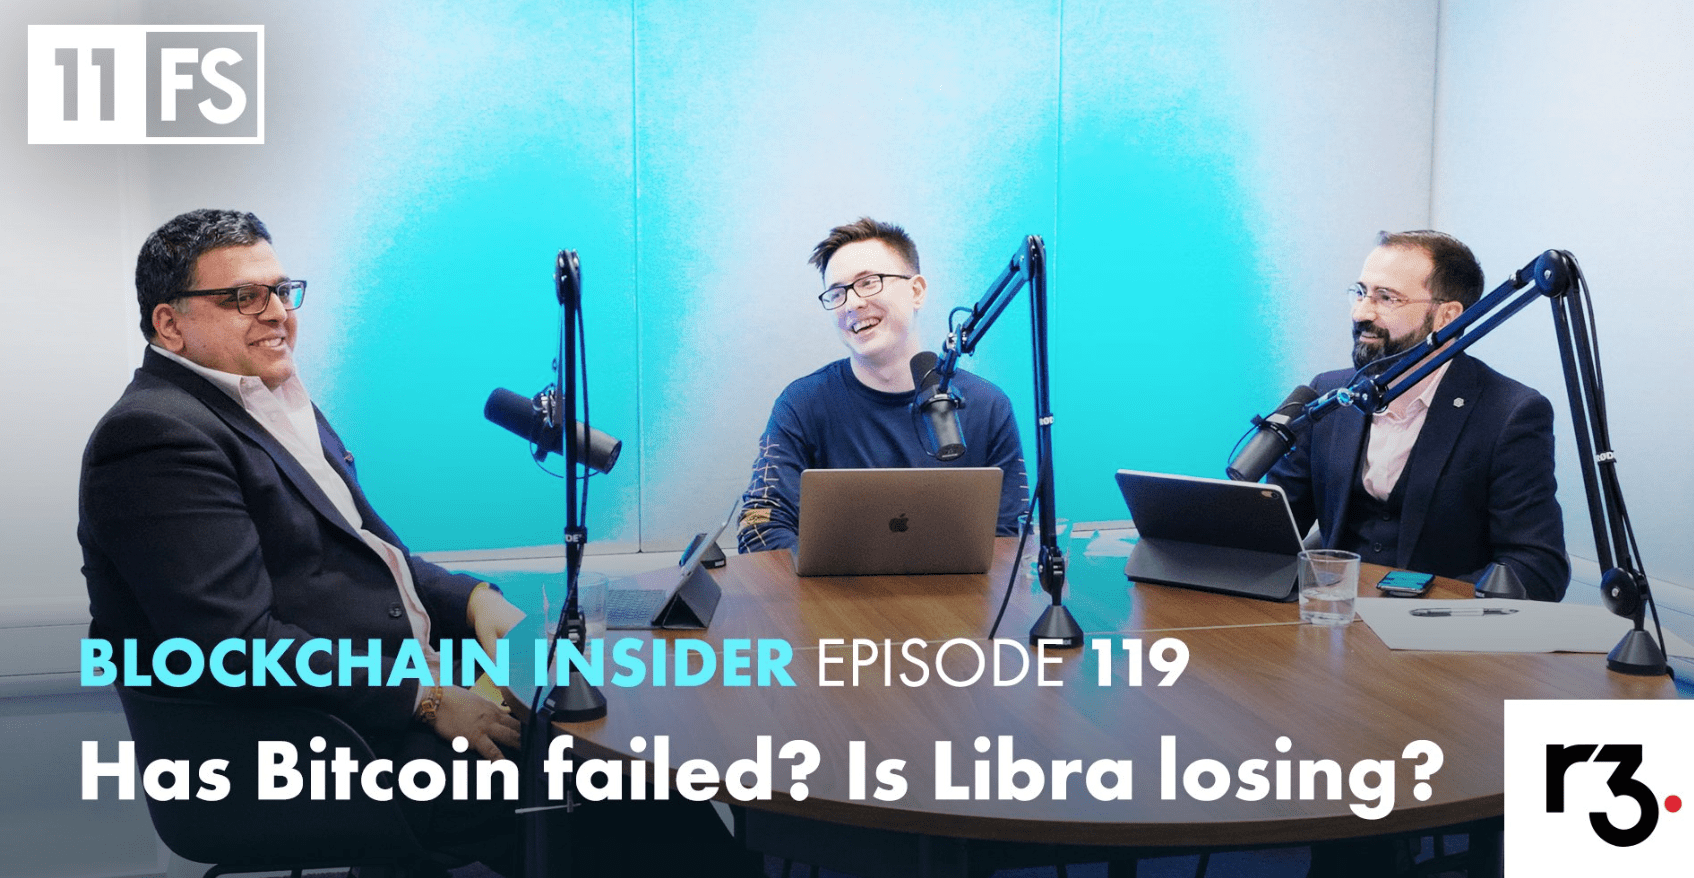 Has Bitcoin failed? Is Libra losing?